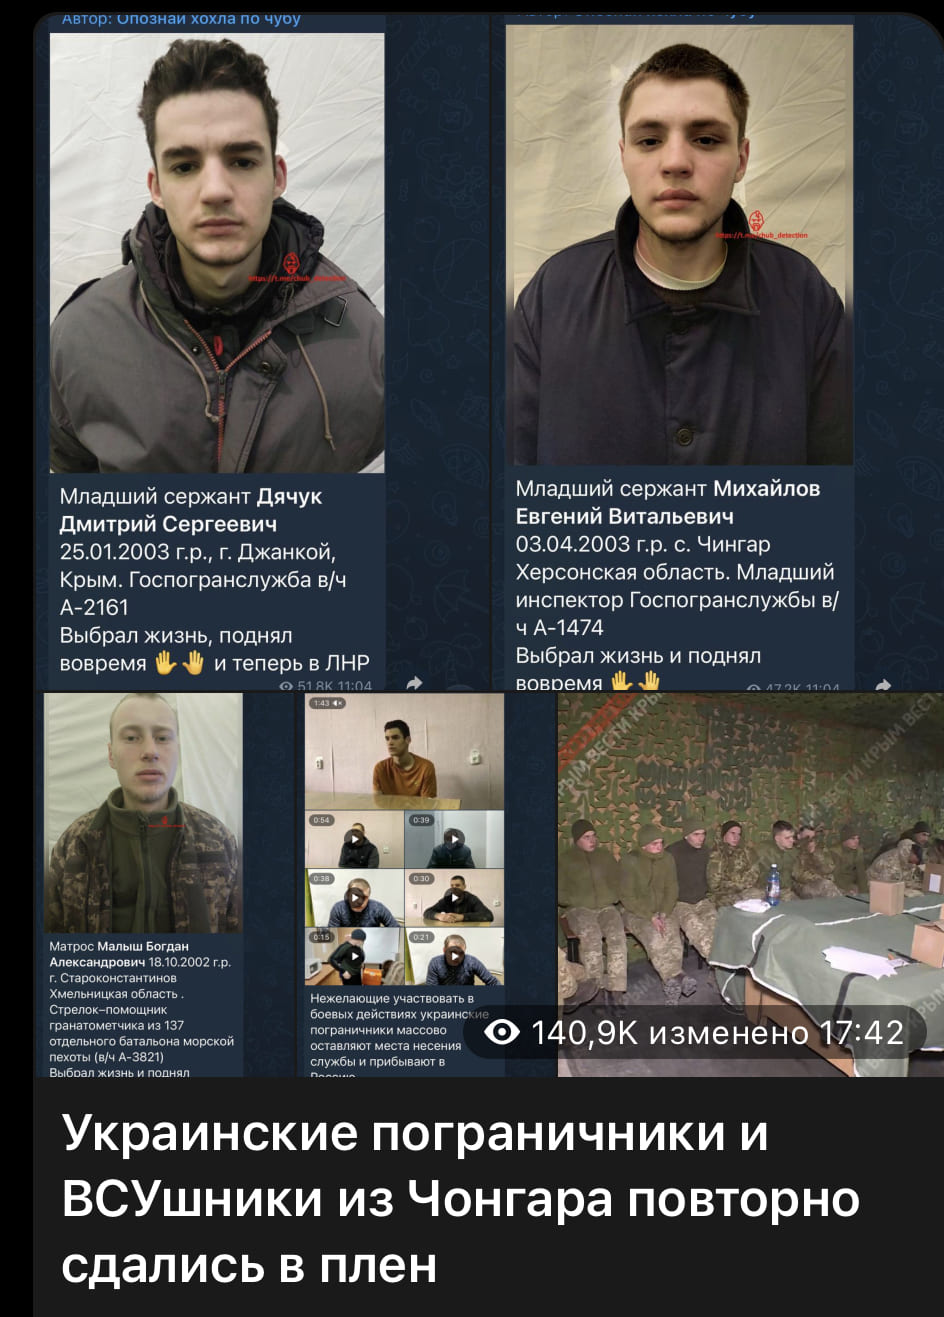 Списки на обмен пленными на украине